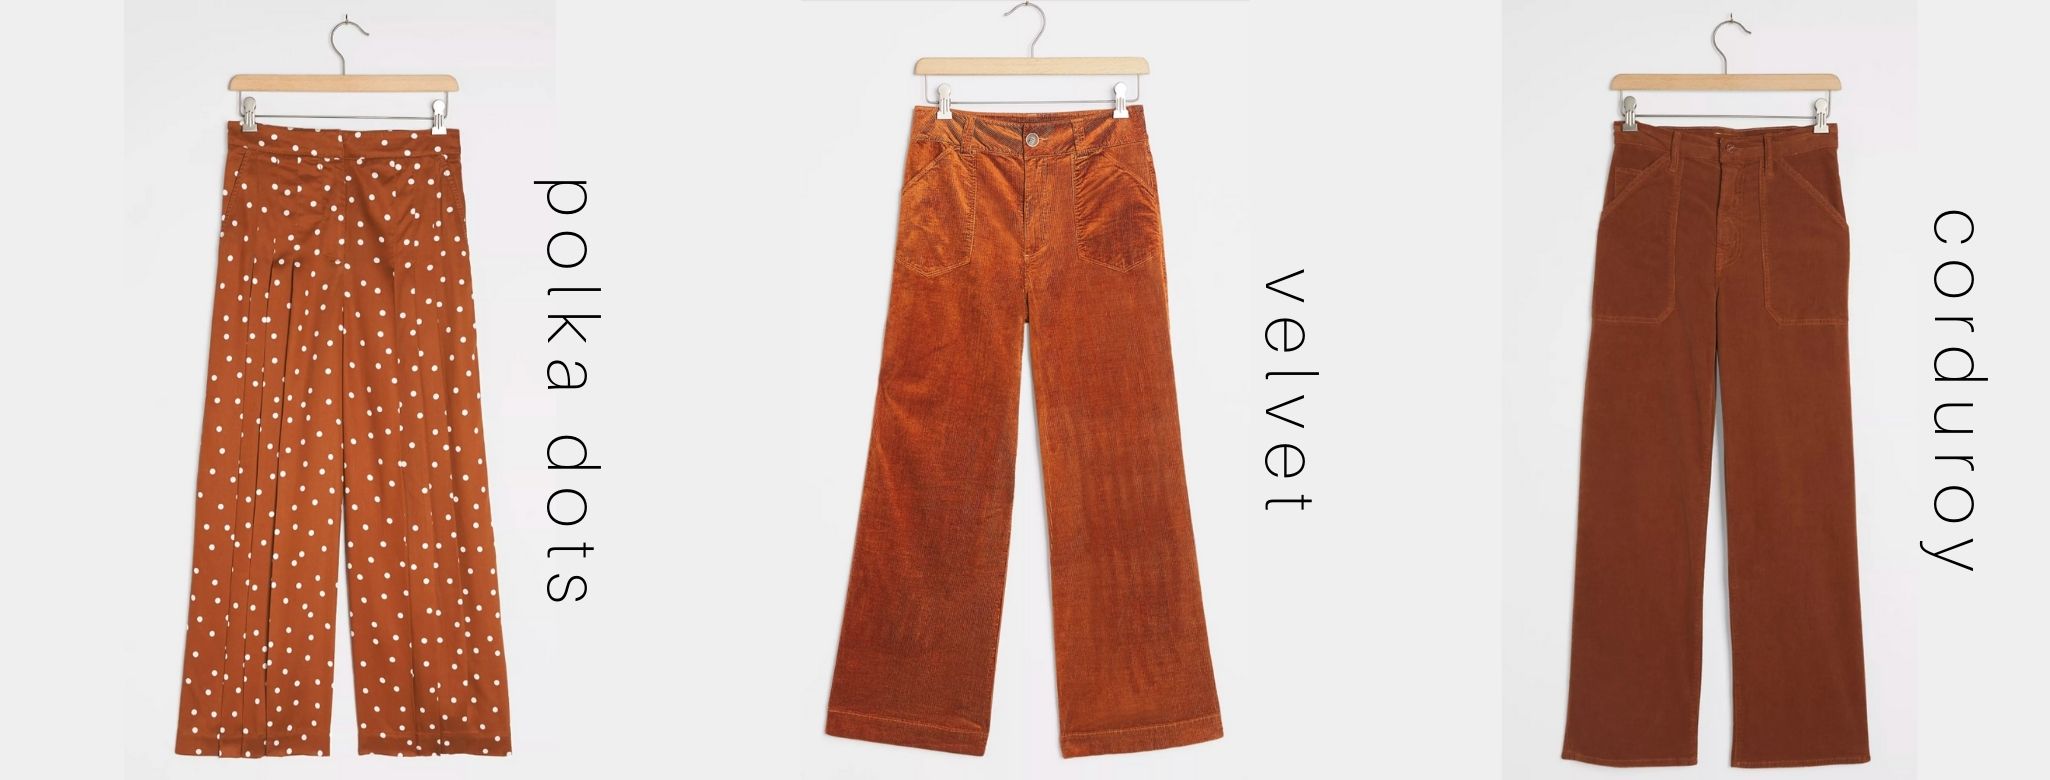 https://www.honeyandbetts.com/wp-content/uploads/2020/08/Burnt-Orange-Fall-Style-Pants-Women-Outfit-Inspiration-Where-To-Buy-Canada.jpg